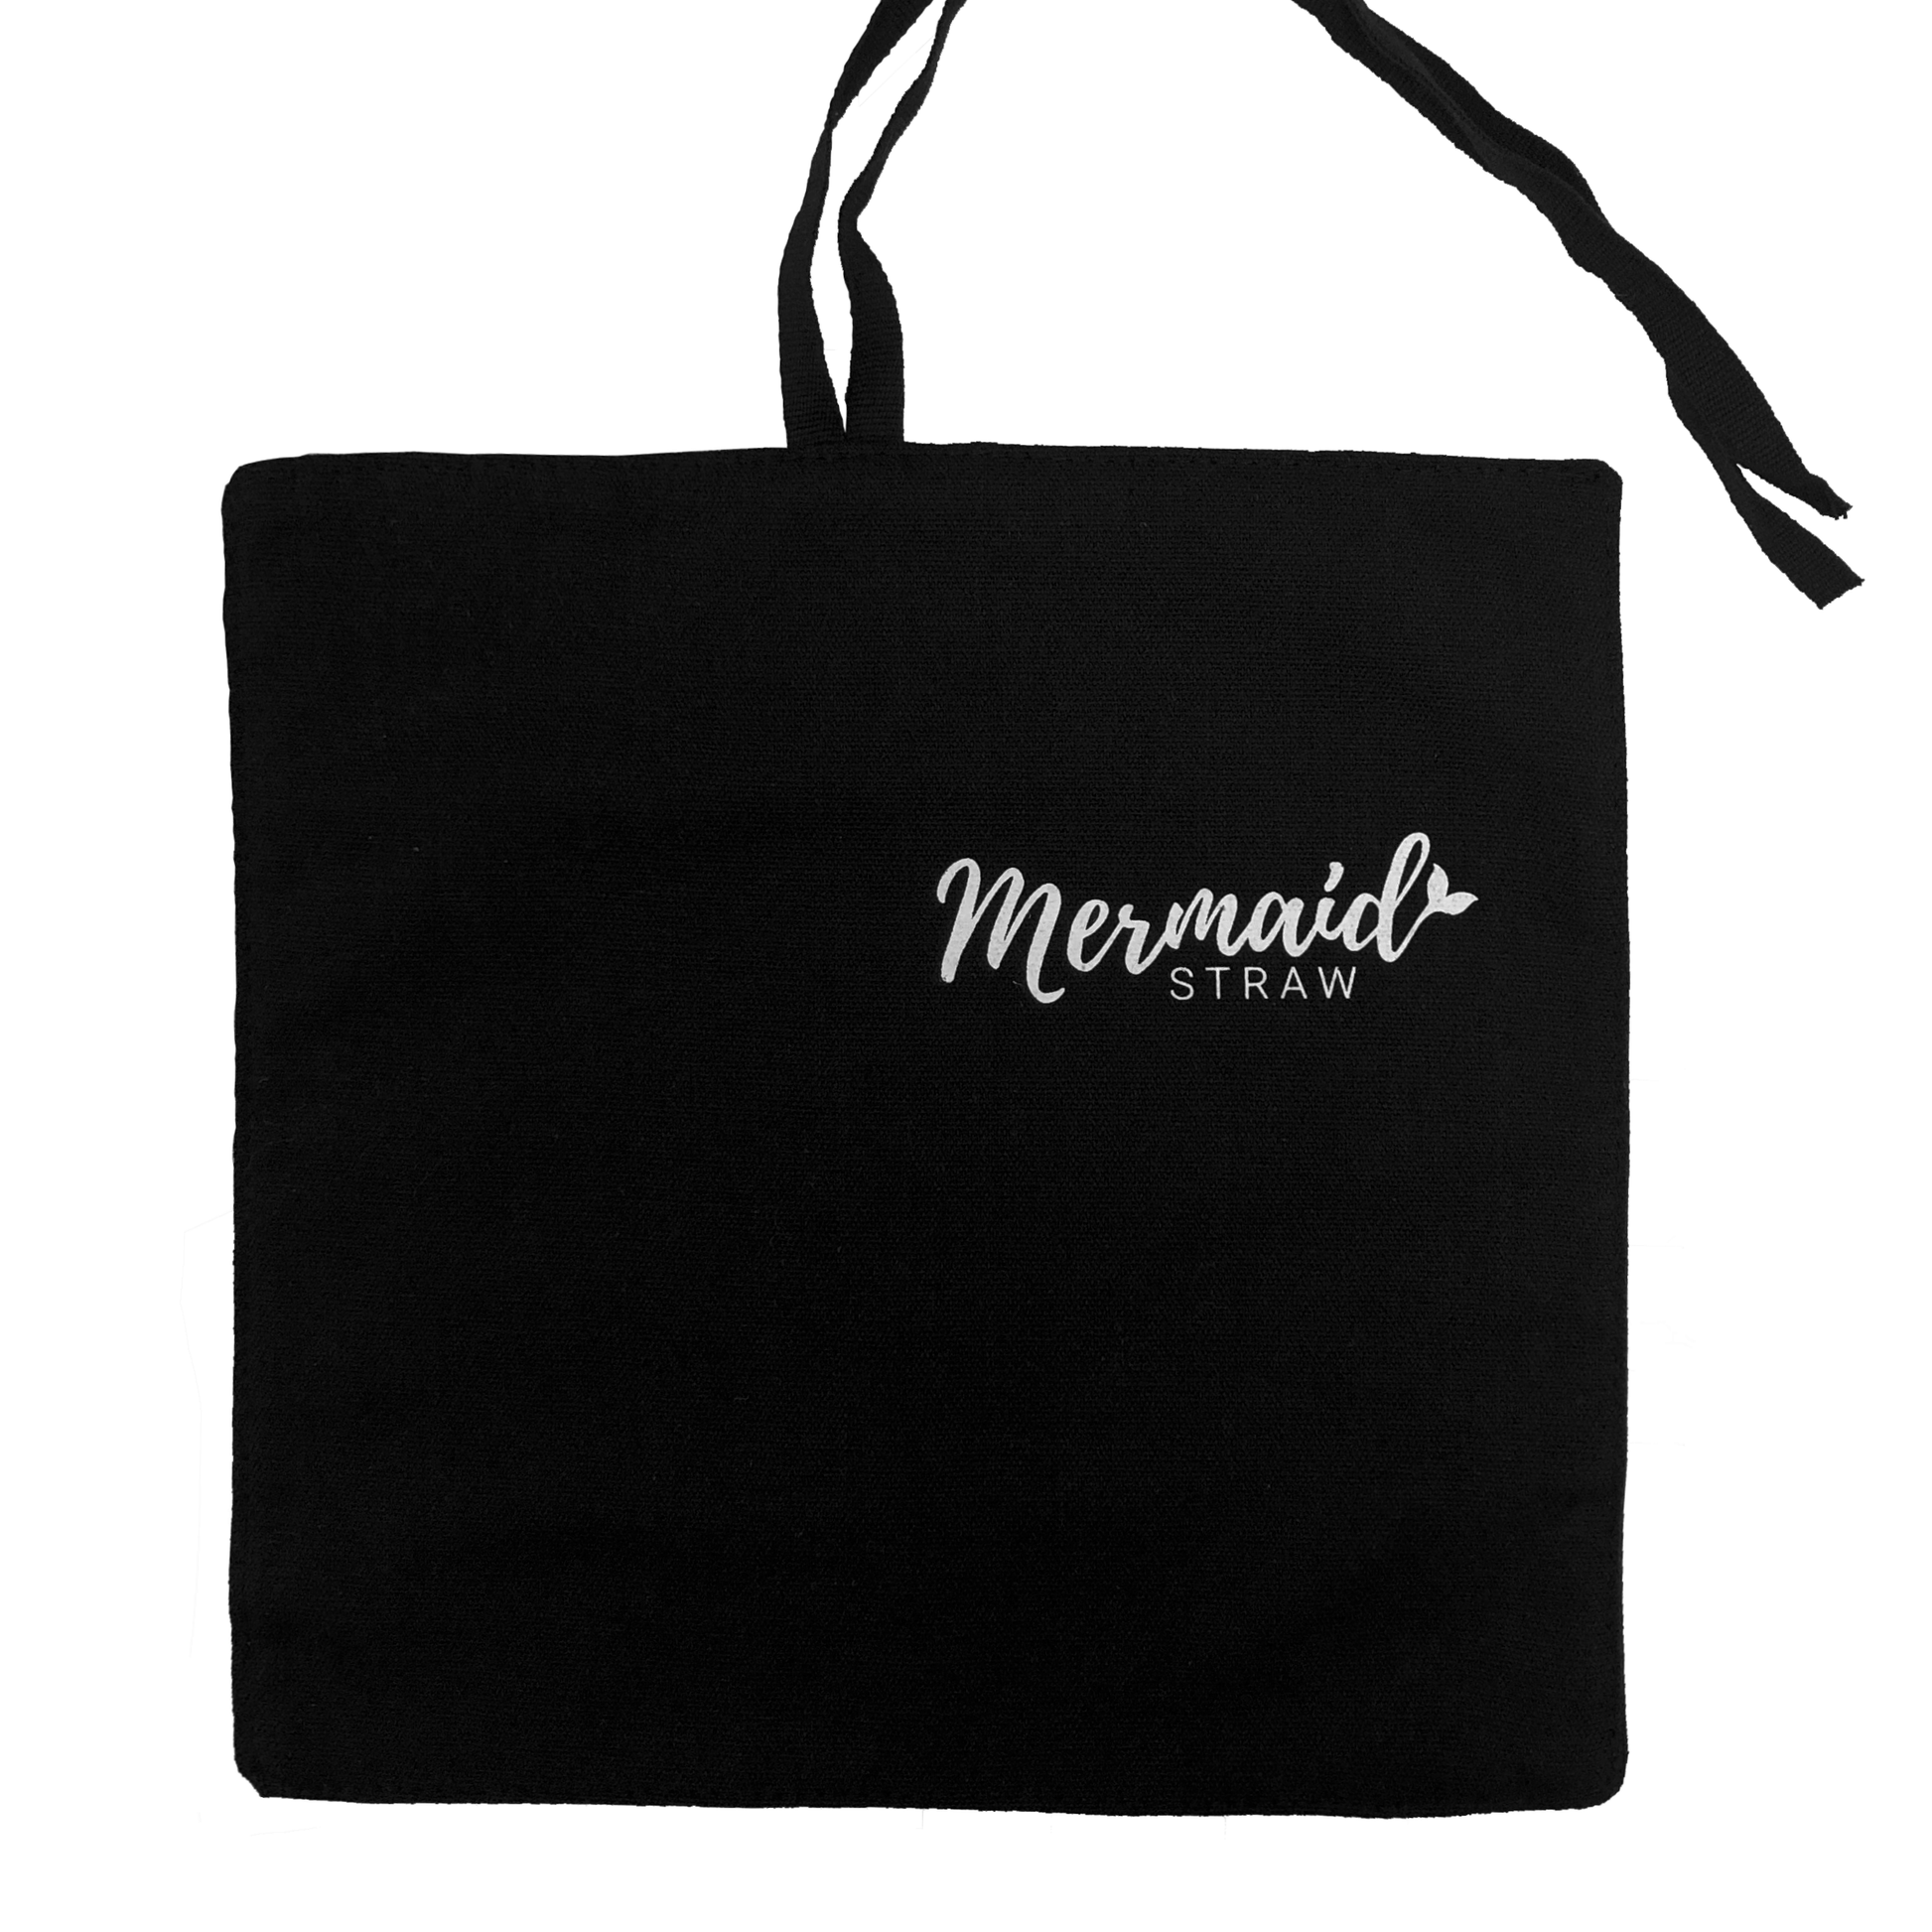 Mermaid long straw and bag